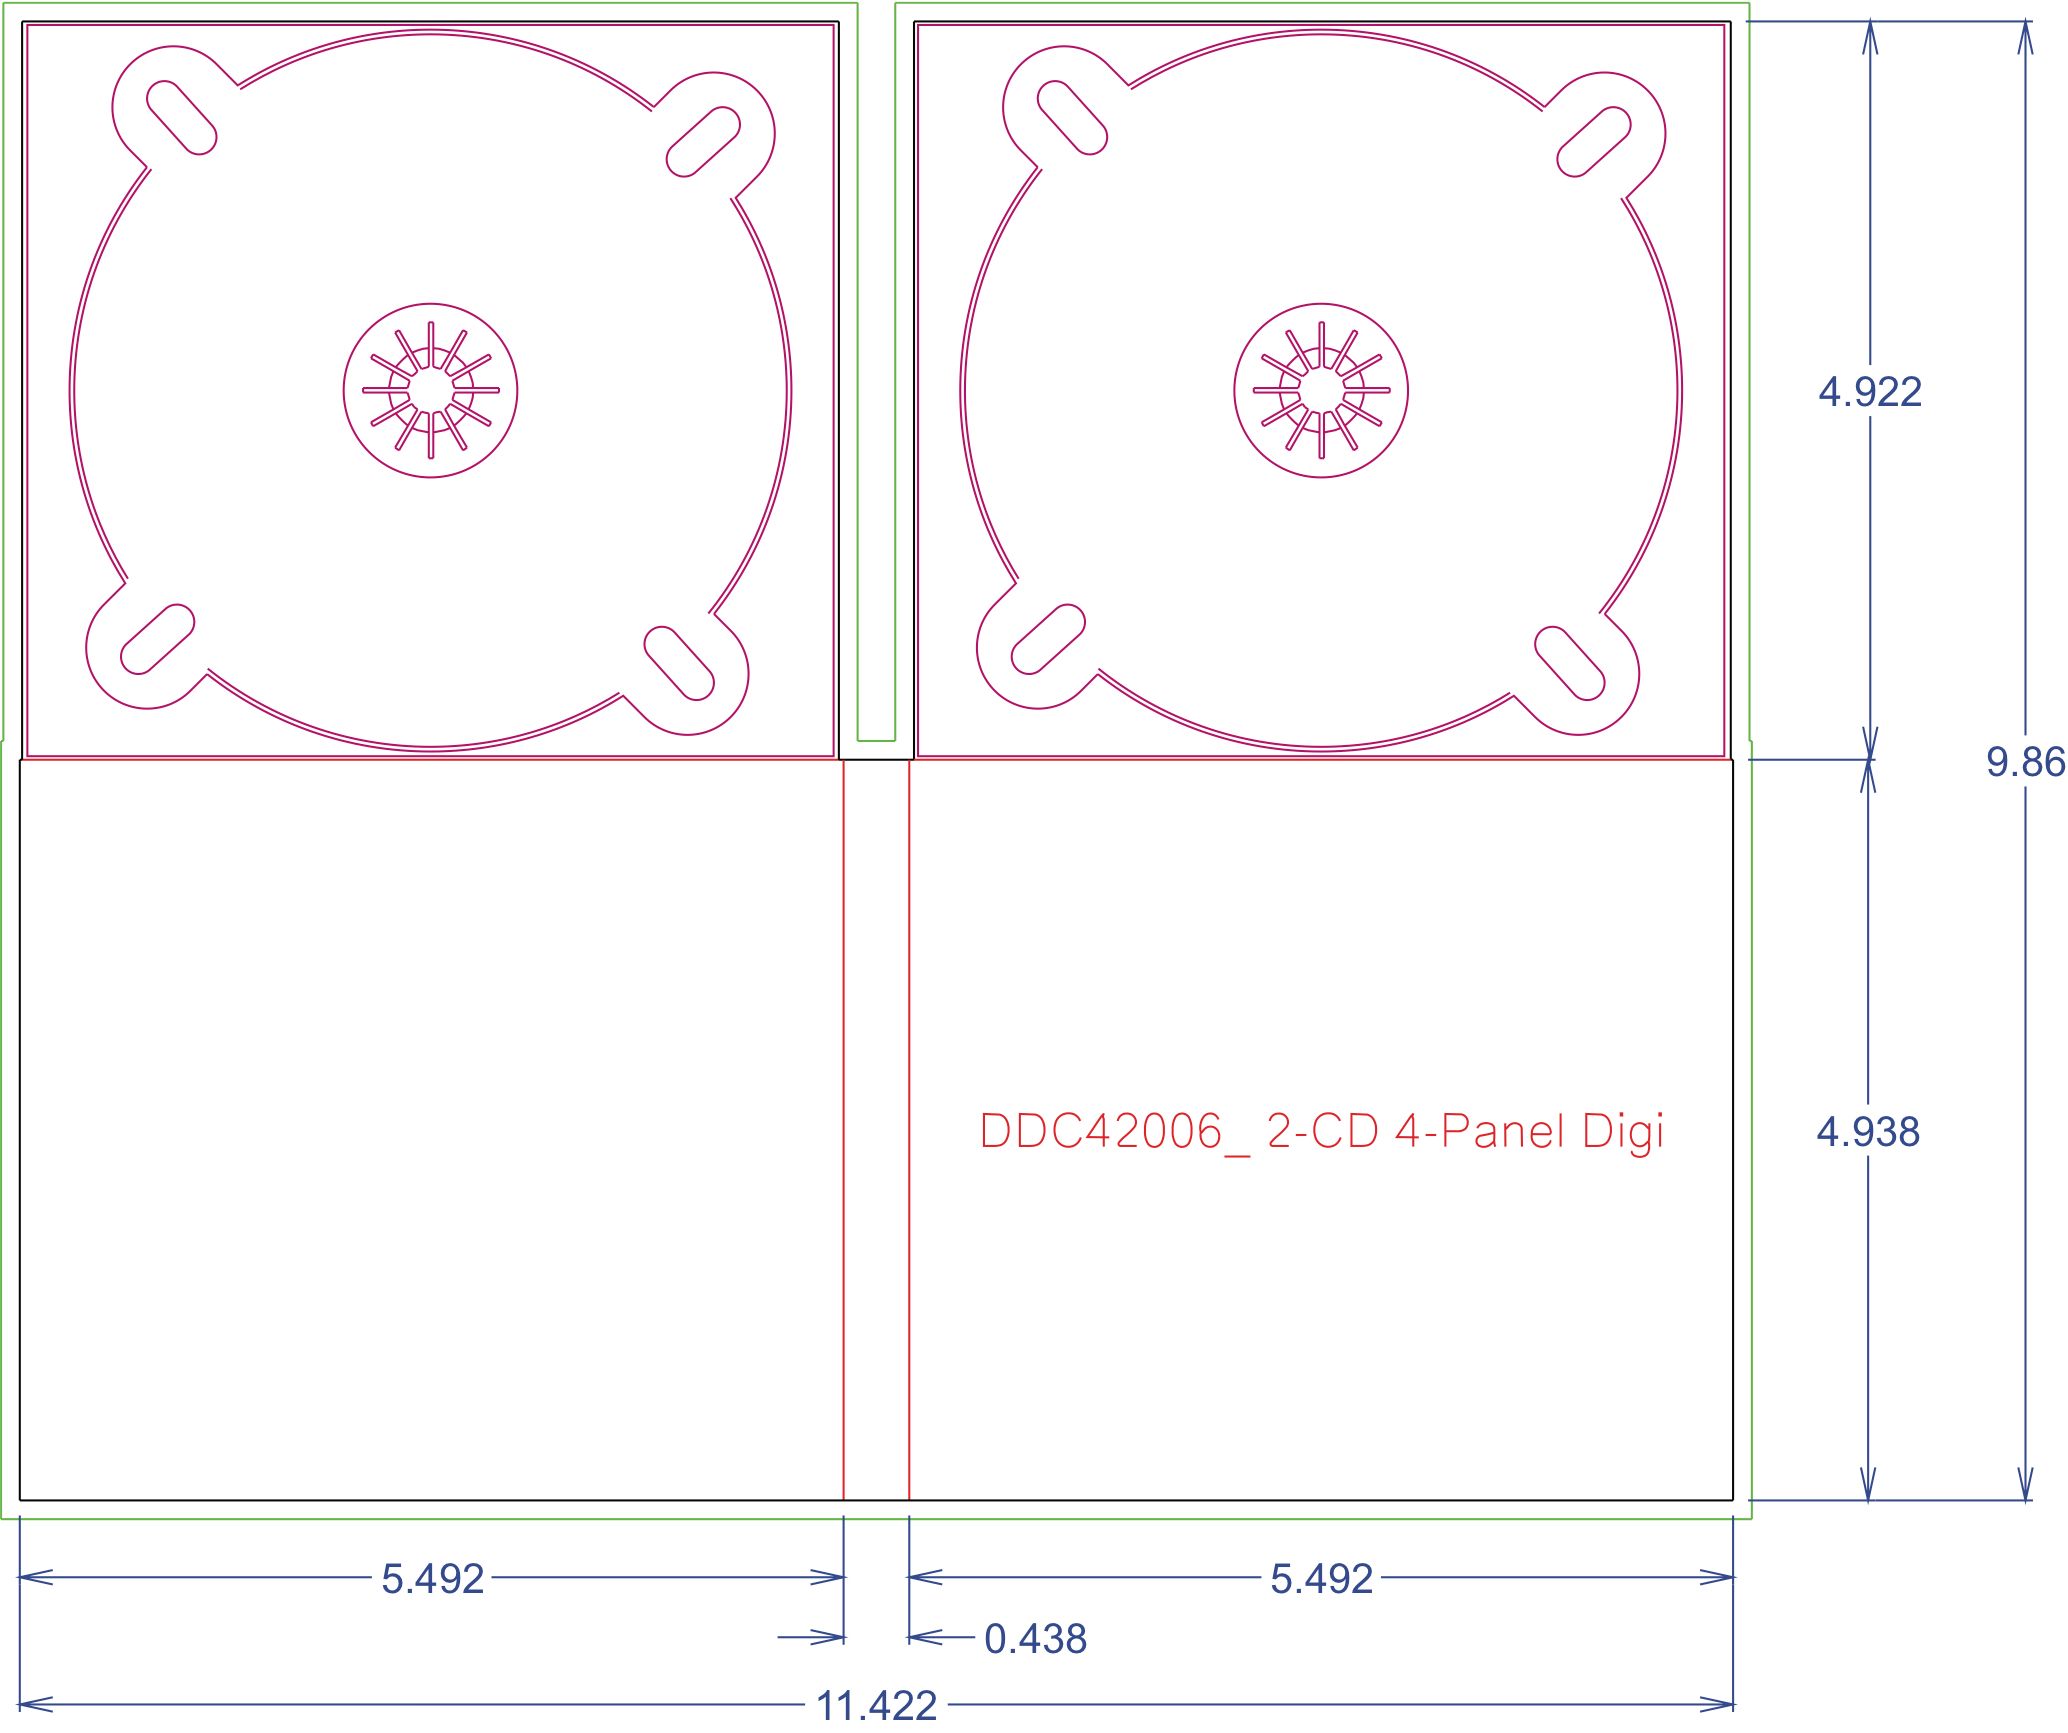 DDC42006 - 4 Panel Digi 2 CD